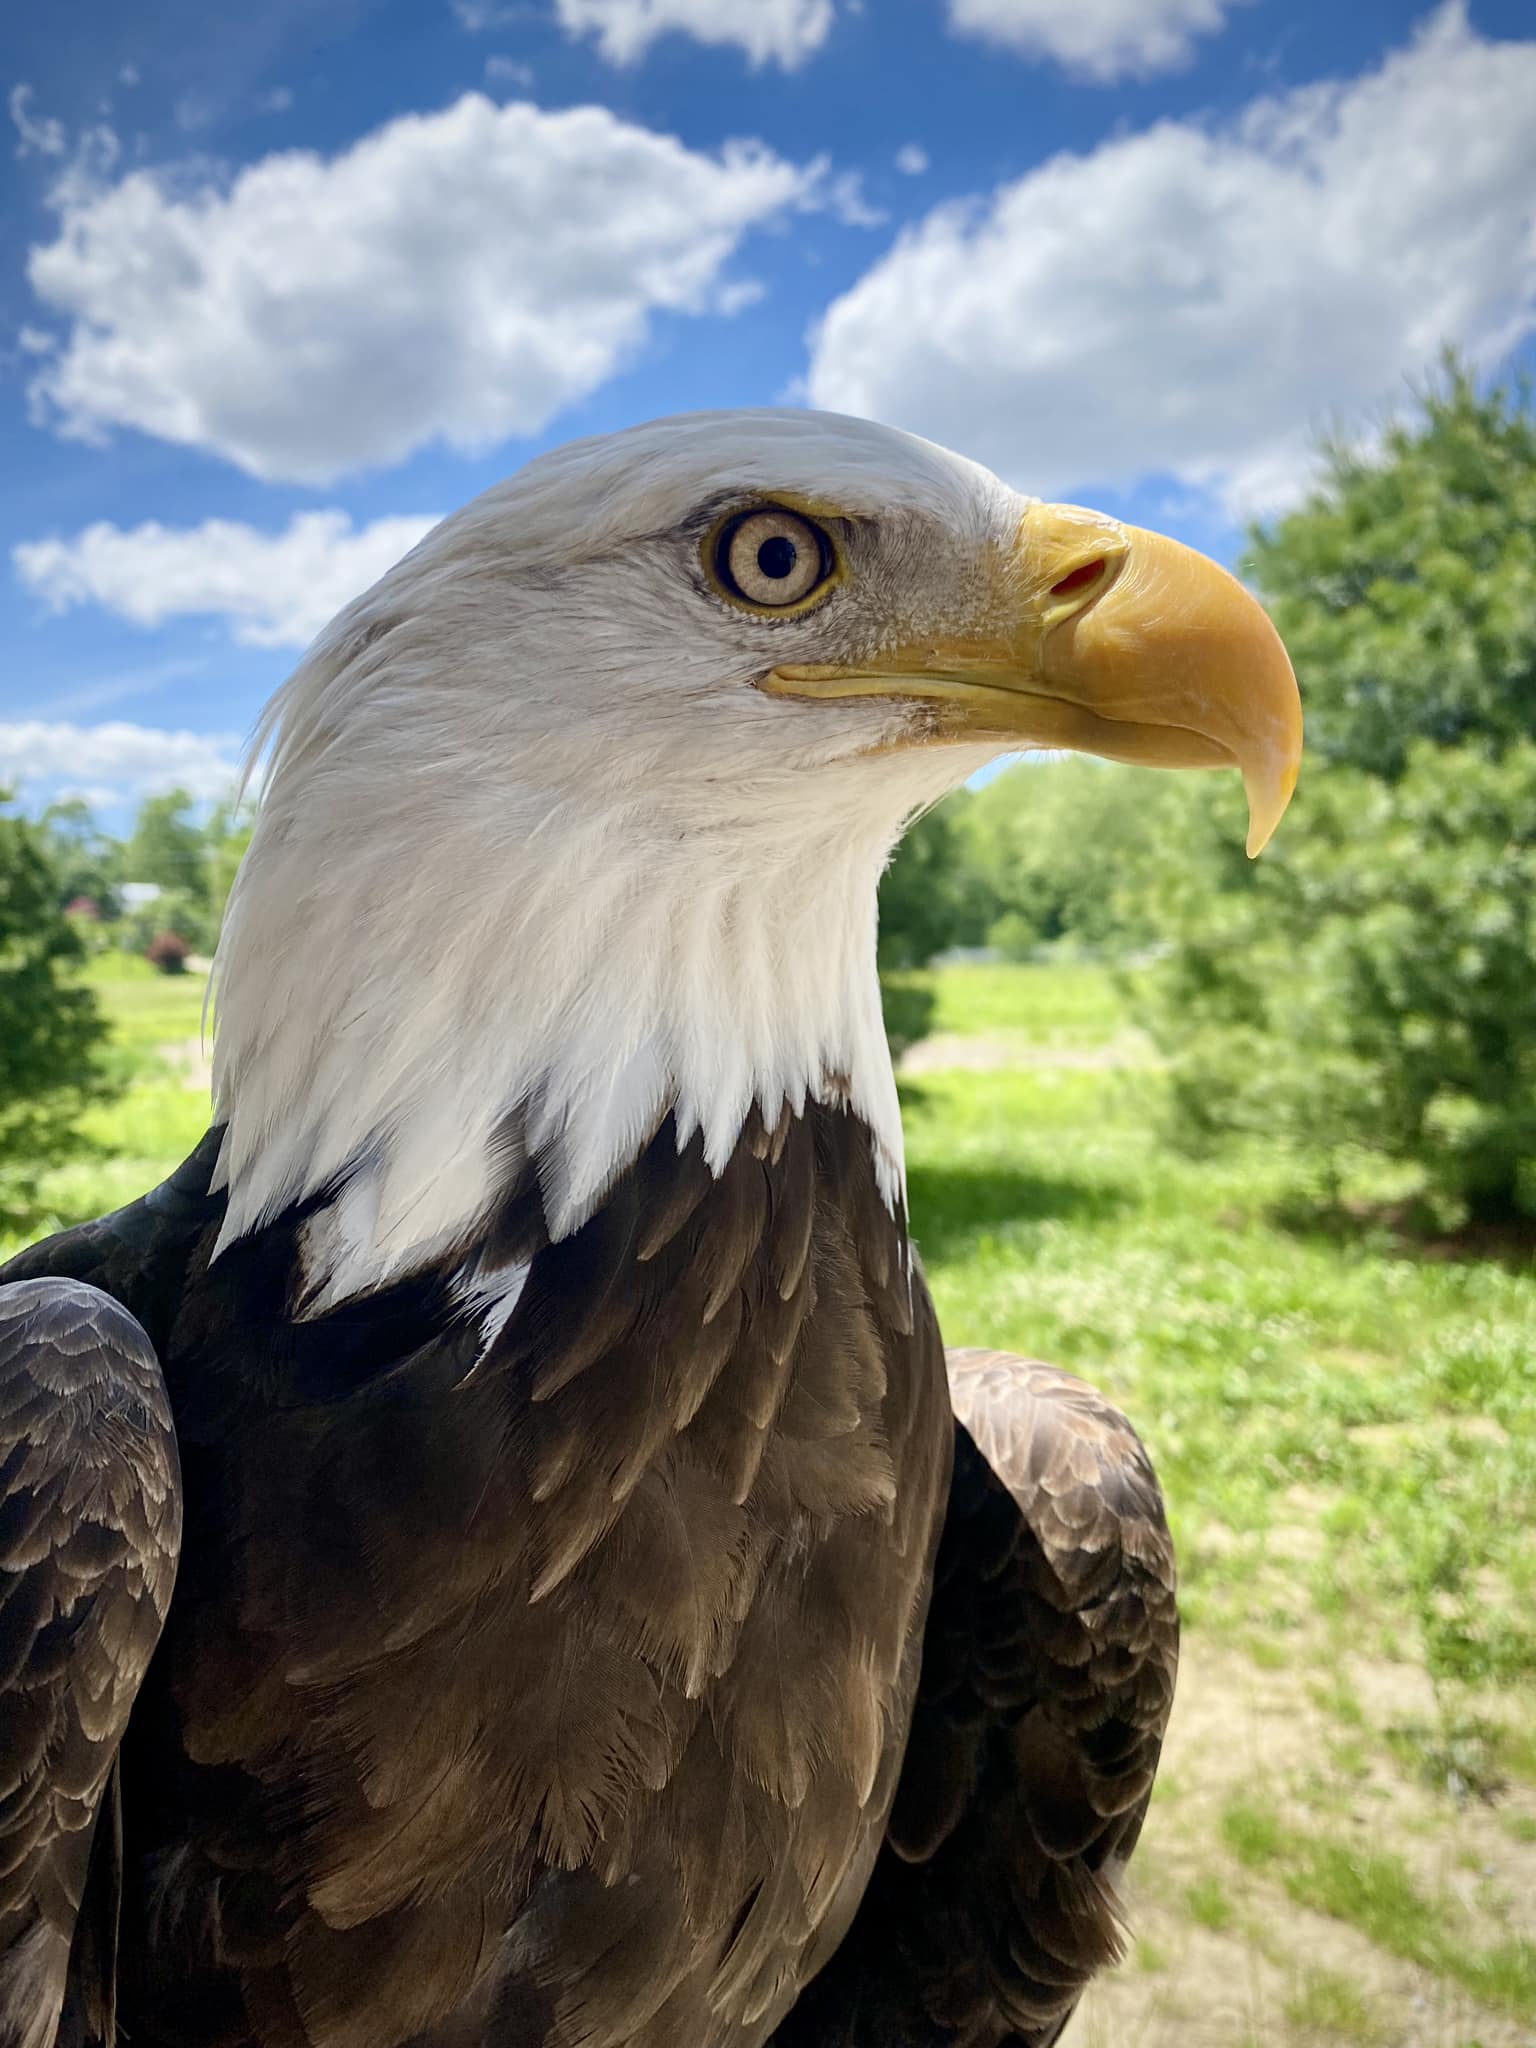 A bald eagle from Soarin Hawk